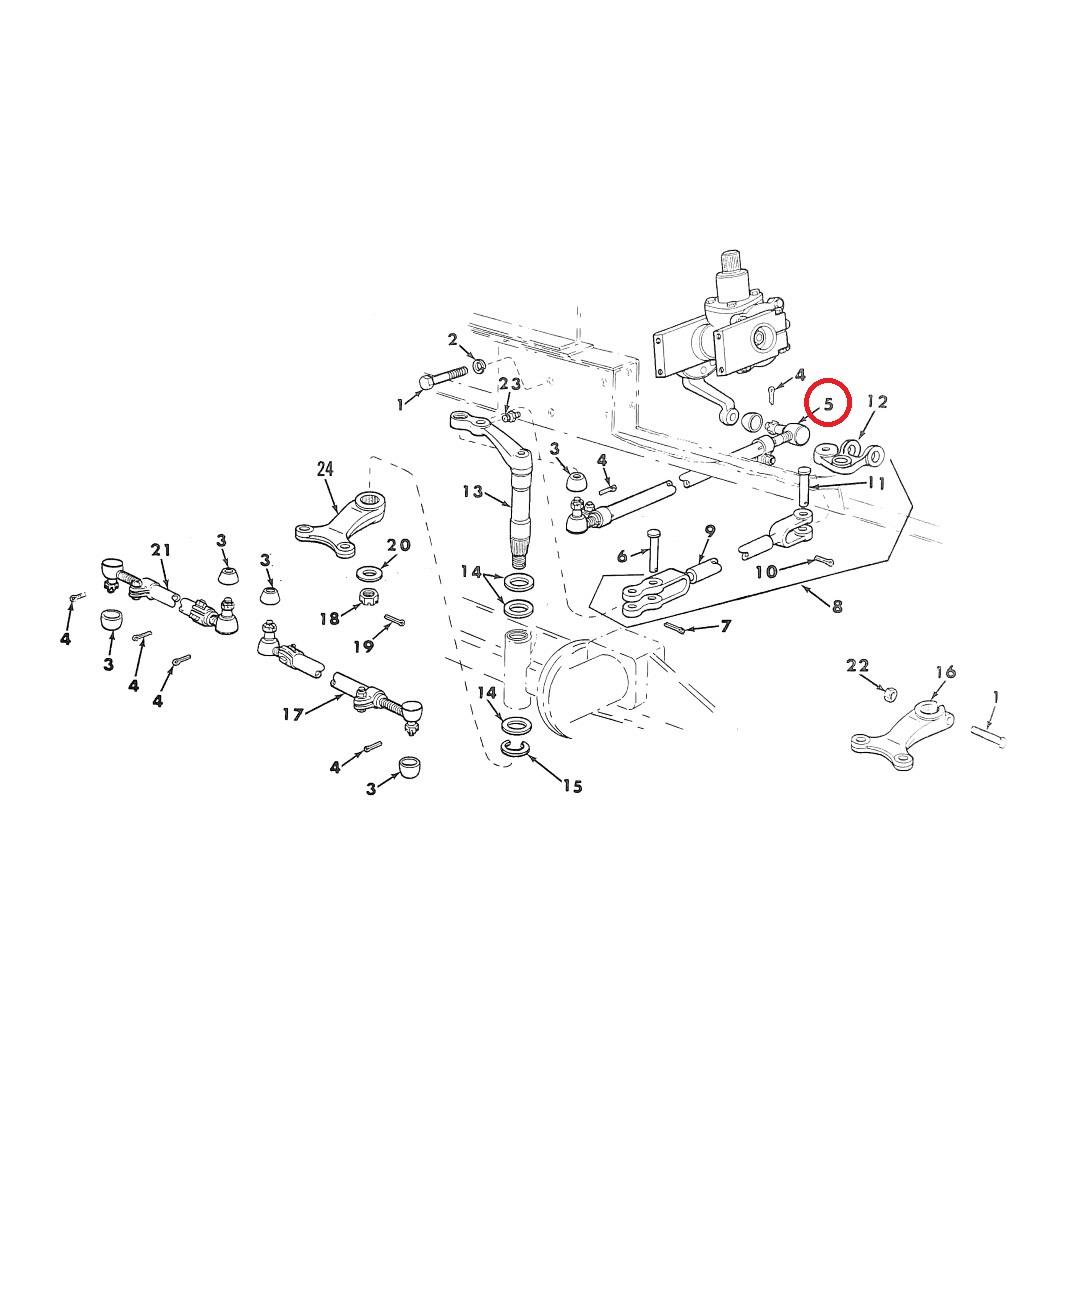 MU-179 | MU-179 Steering Linkage Drag Link Assembly Mule M274 Parts Diagram (Large).jpg